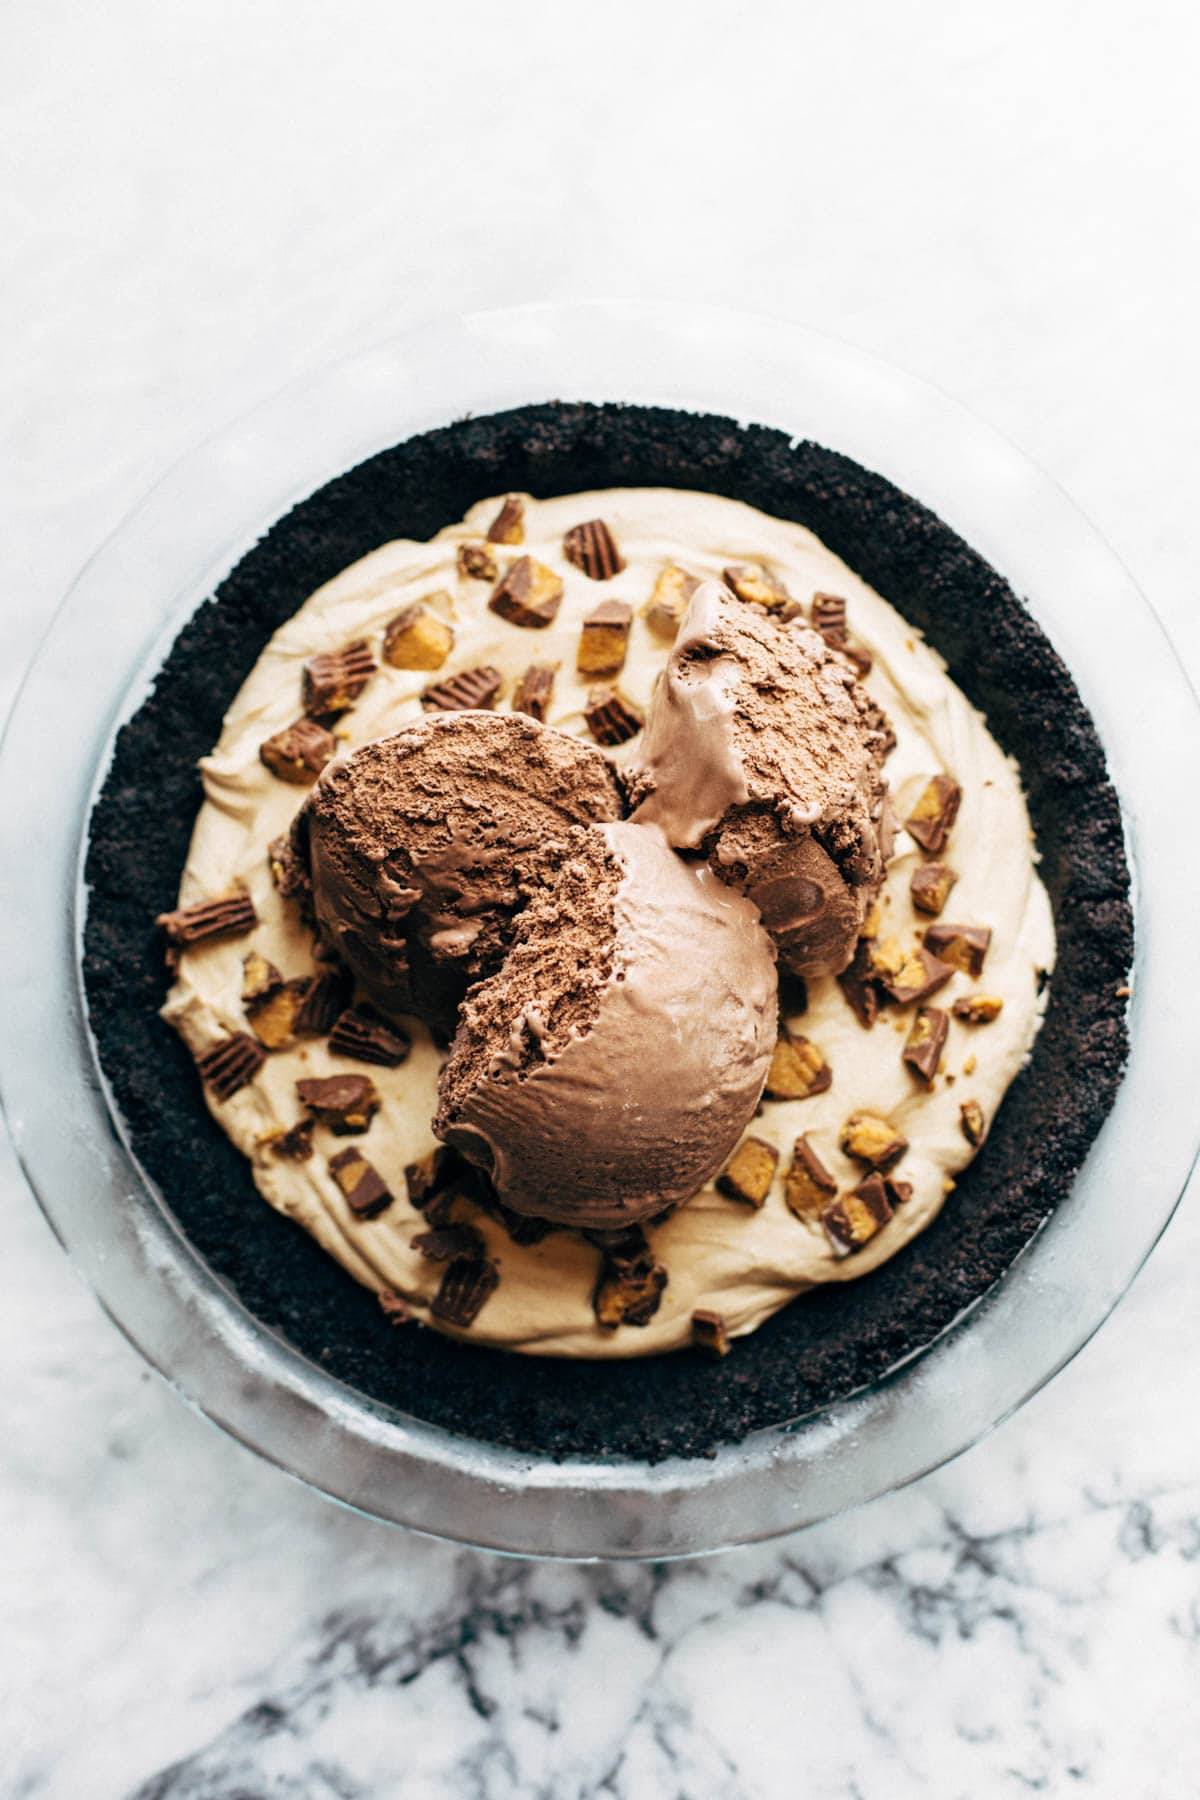 Chocolate ice cream scoops on peanut butter pie base.